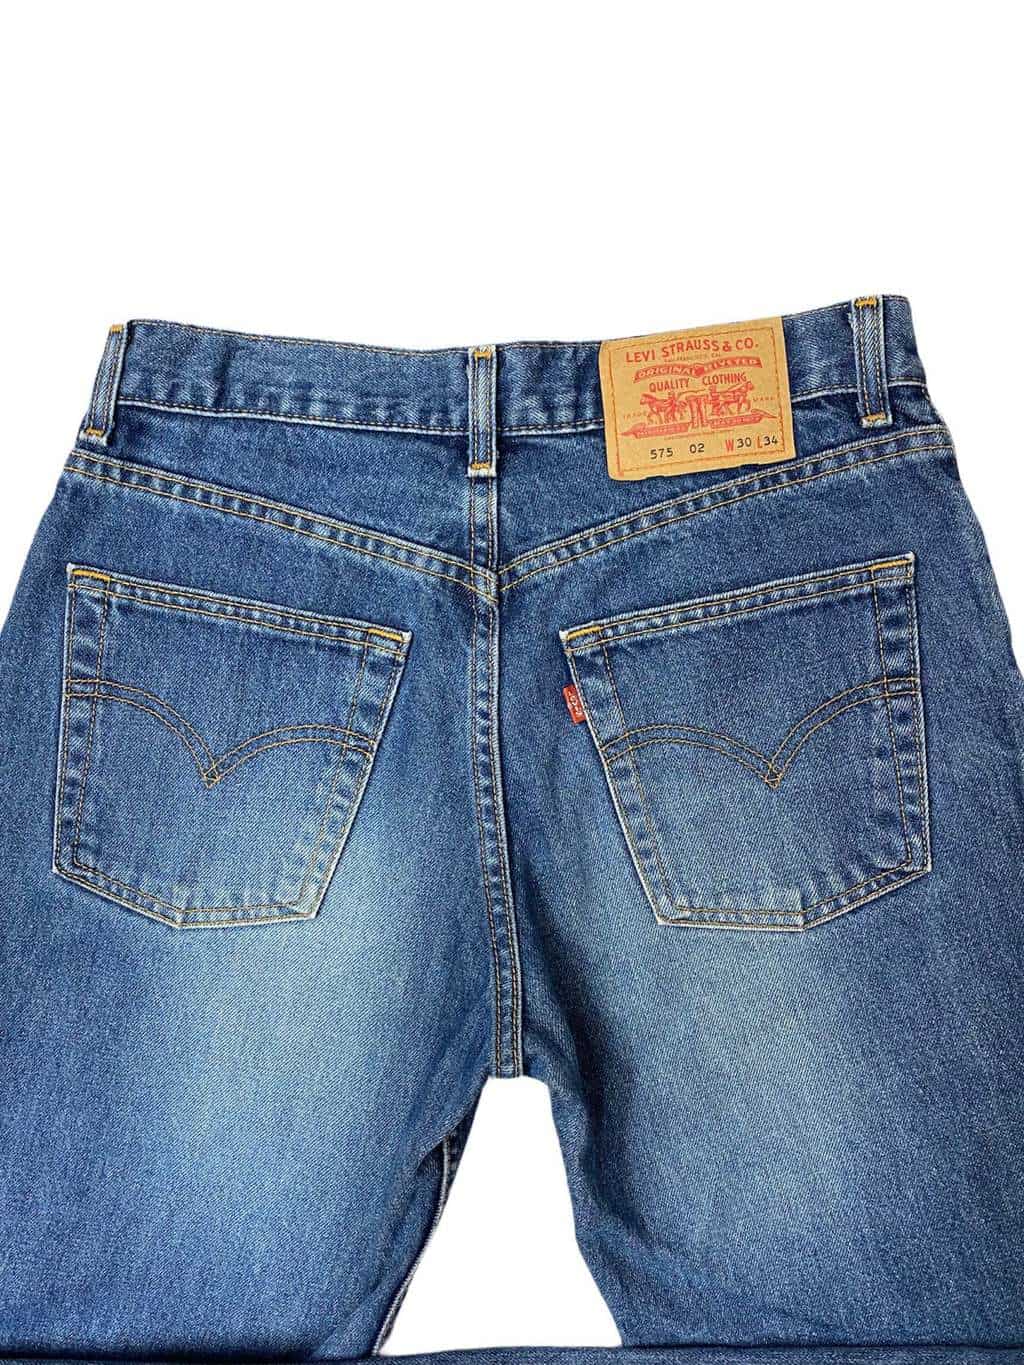 Vintage Levis 575 denim jeans in mid-blue wash, straight leg - W30 x ...